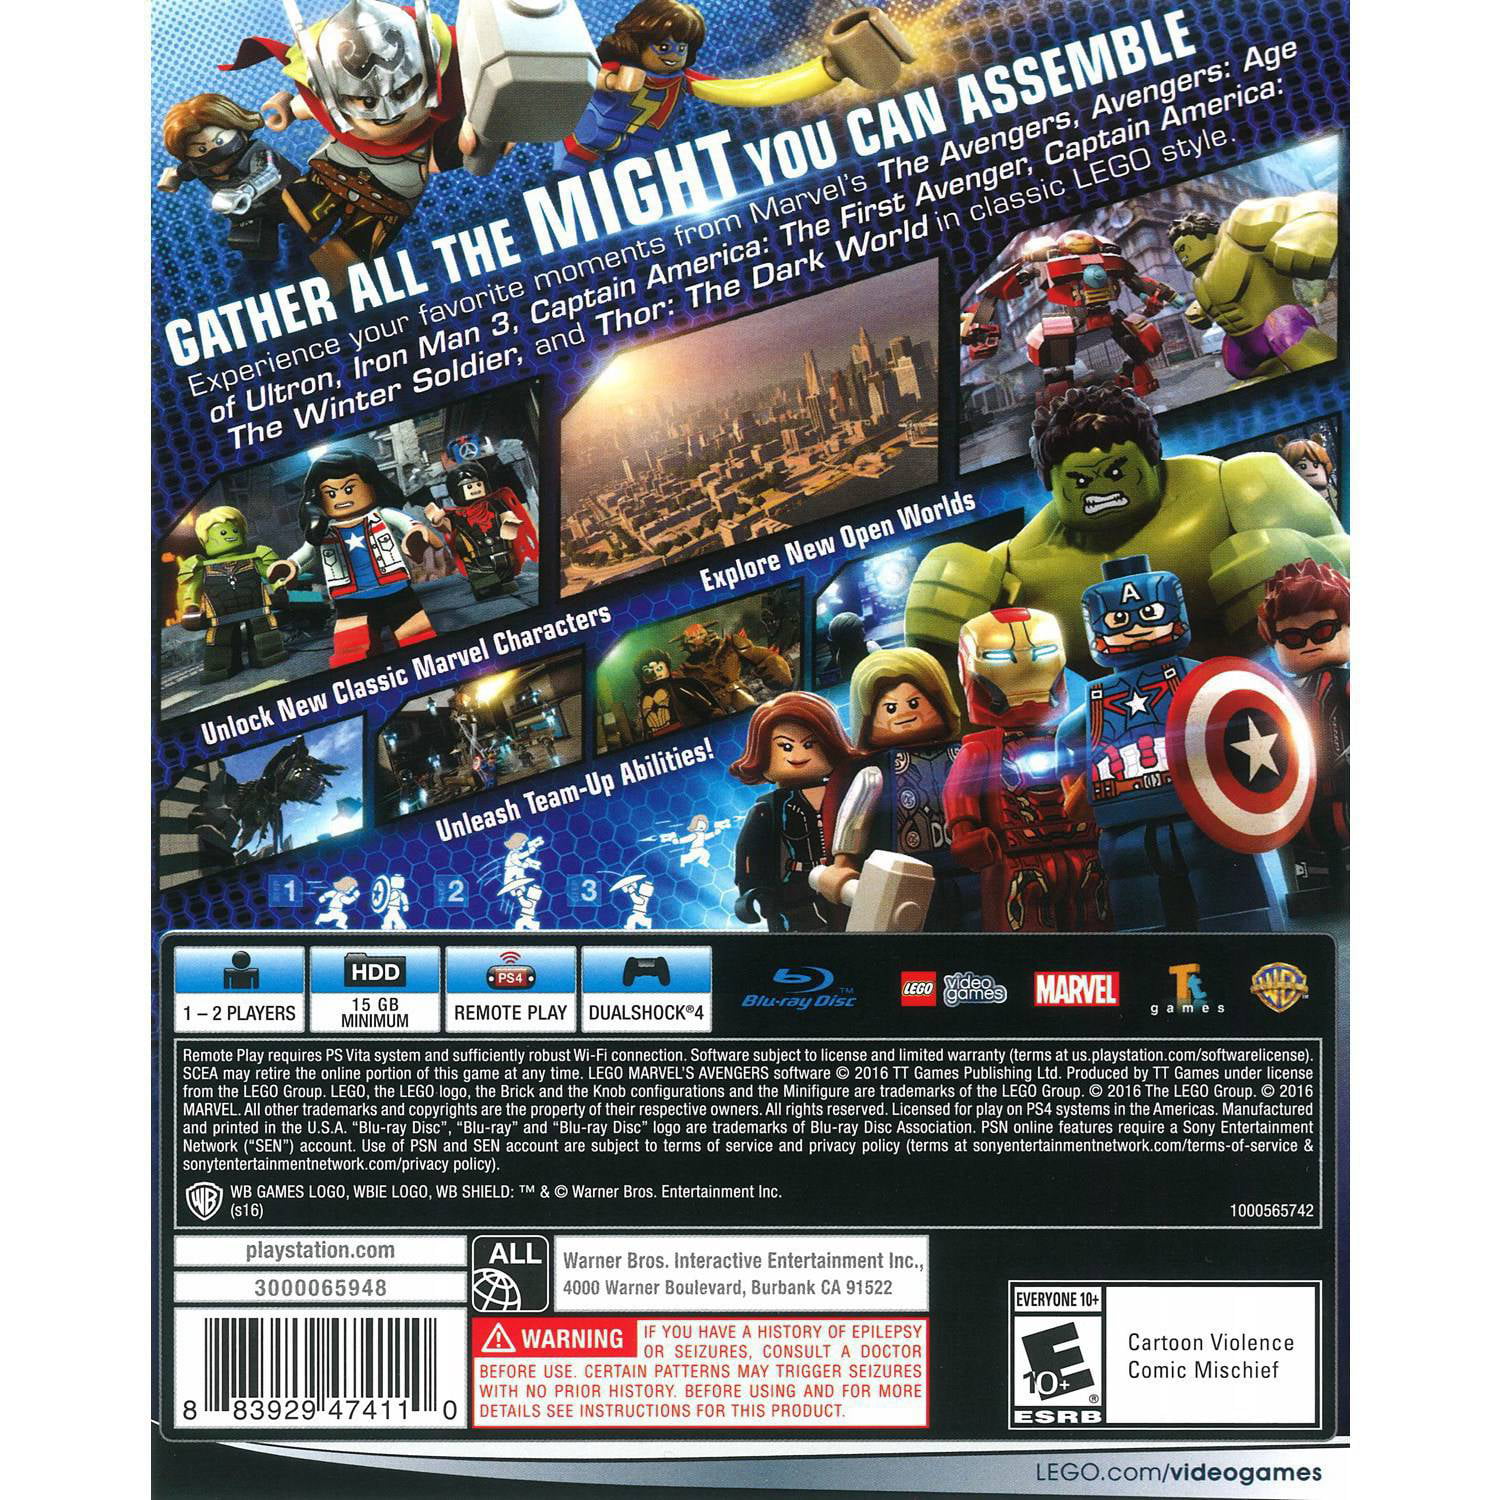 LEGO Marvel Avengers, Warner Bros, PlayStation 4 Walmart.com